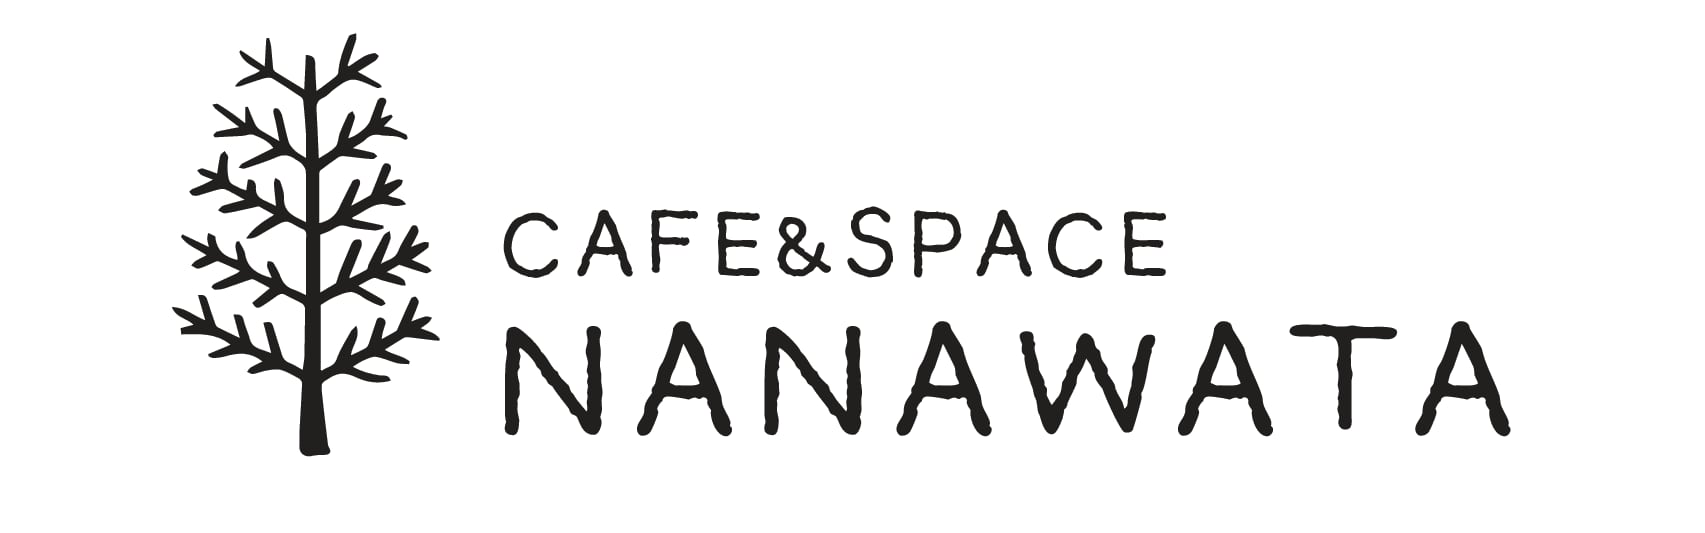 CAFE&SPACE NANAWATA